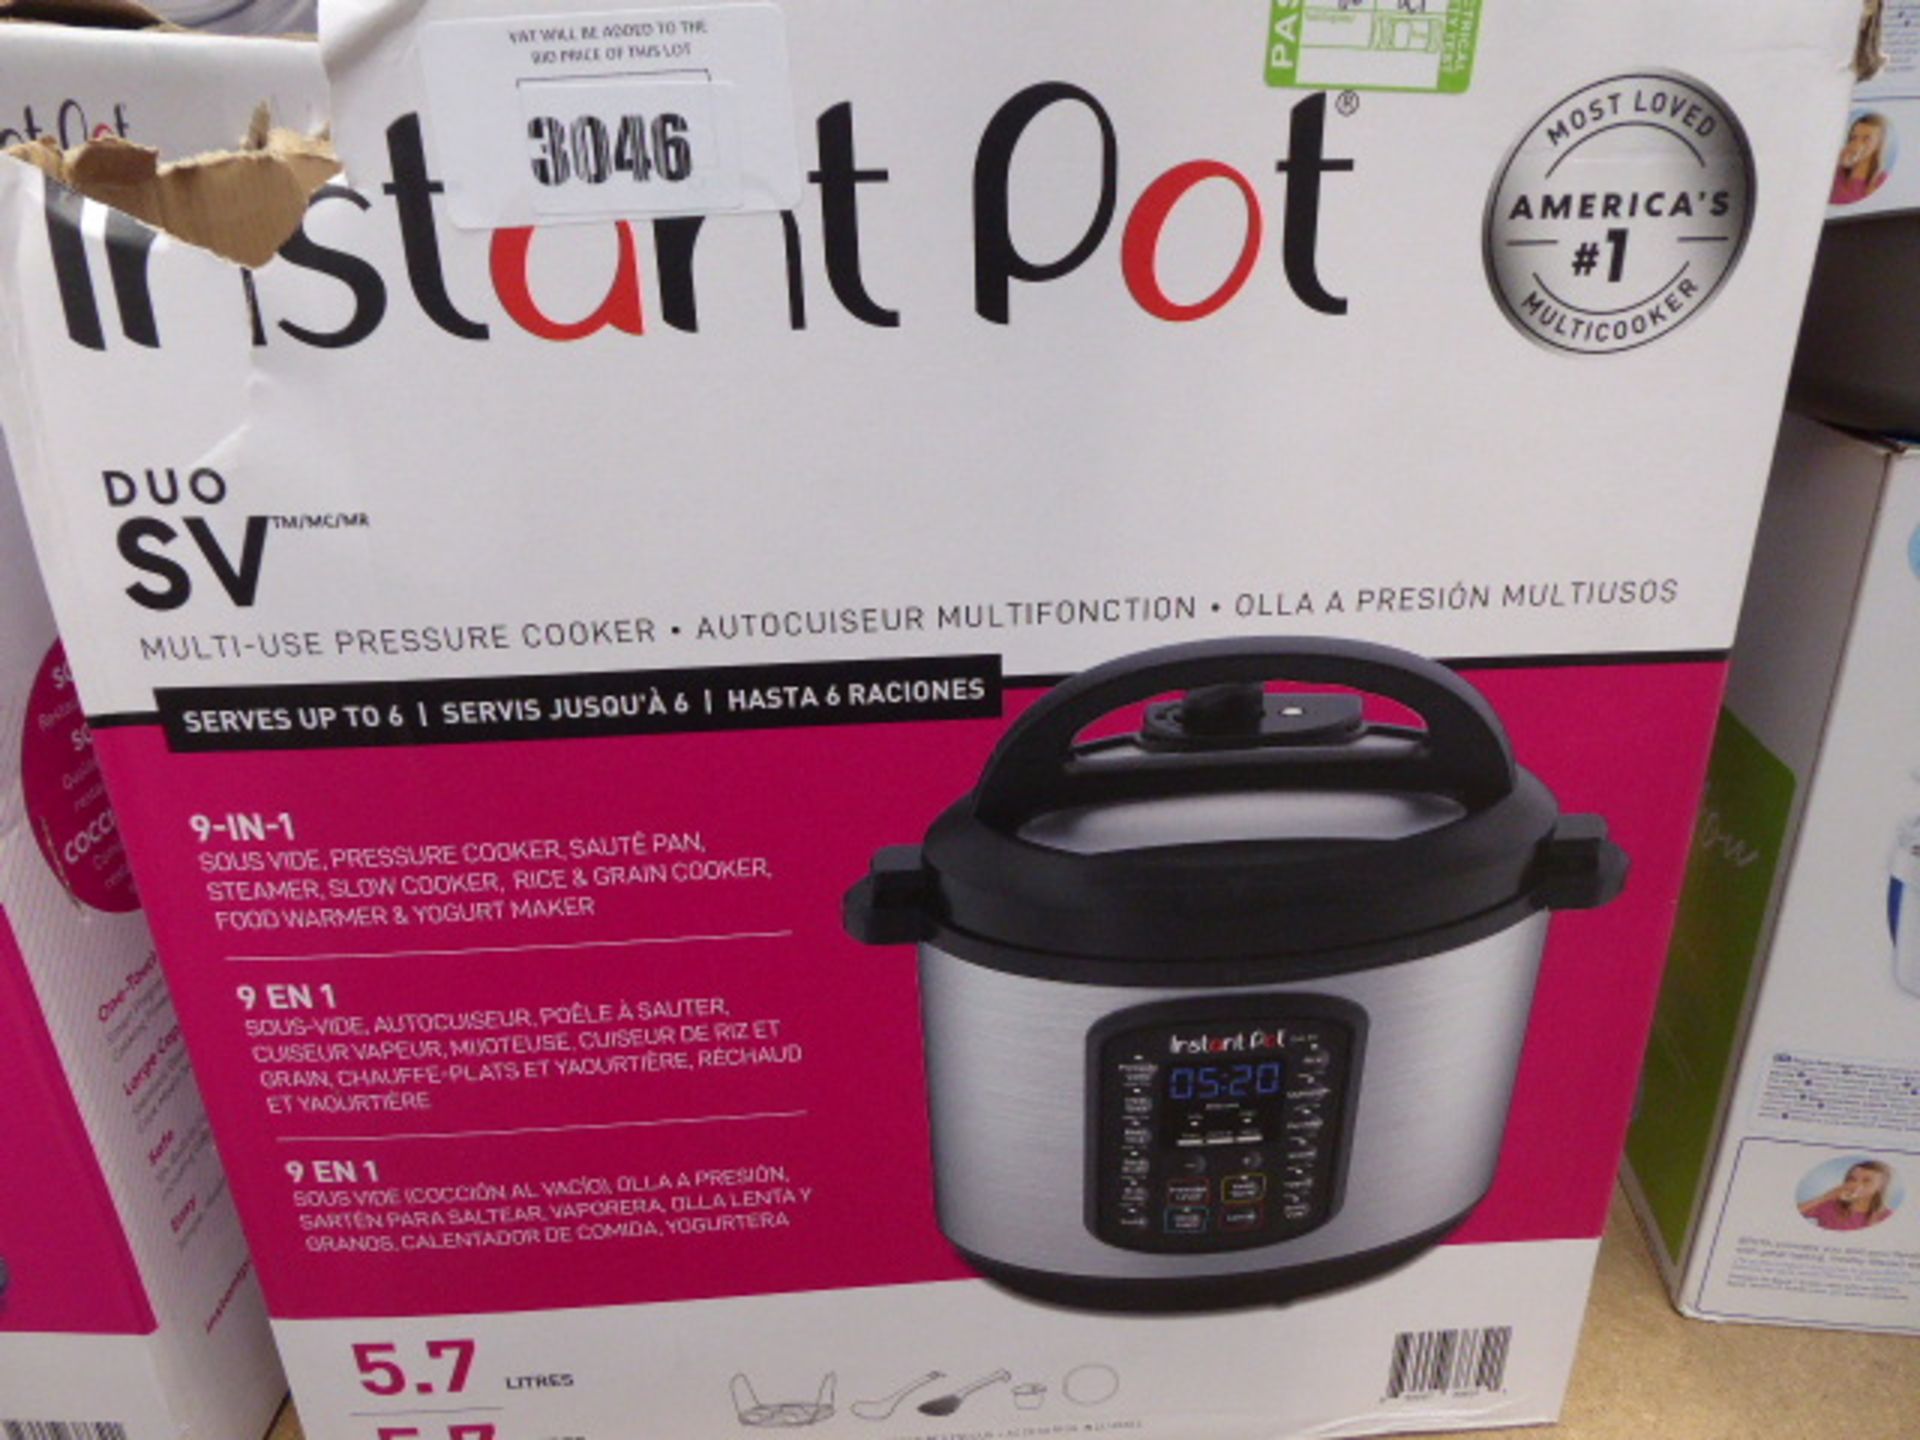 (TN21) Instant Pot multi use pressure cooker with box